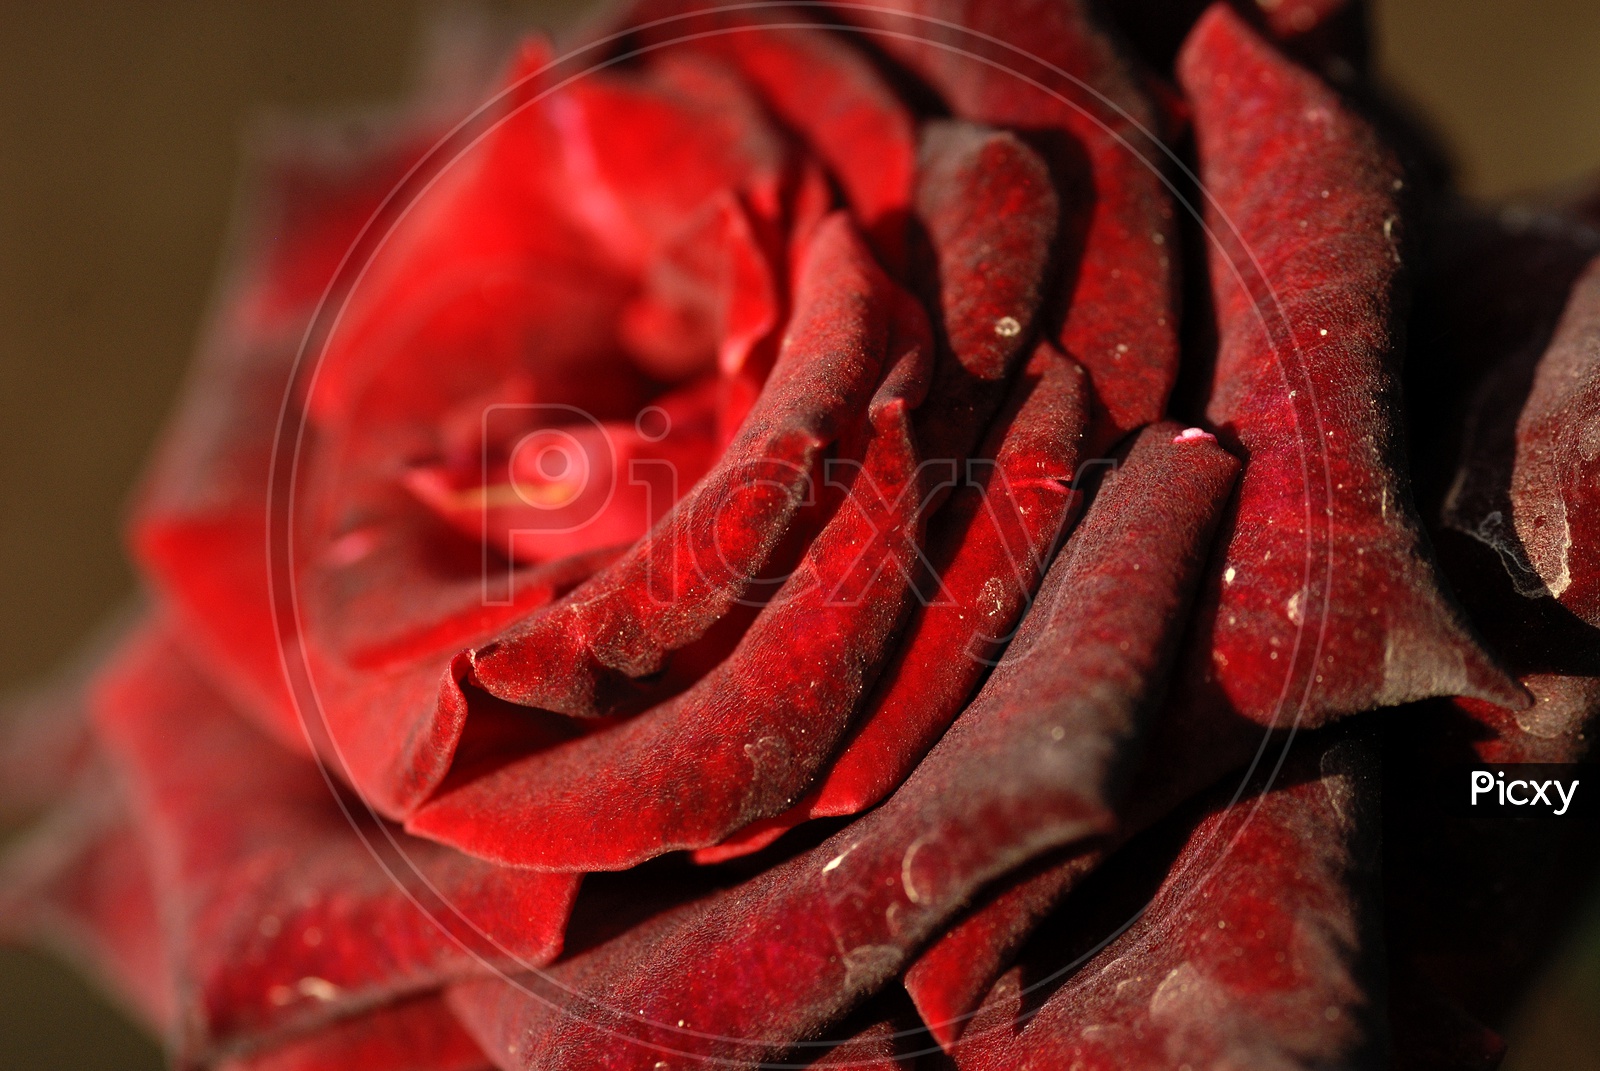 Rose Flower With Petals Closeup